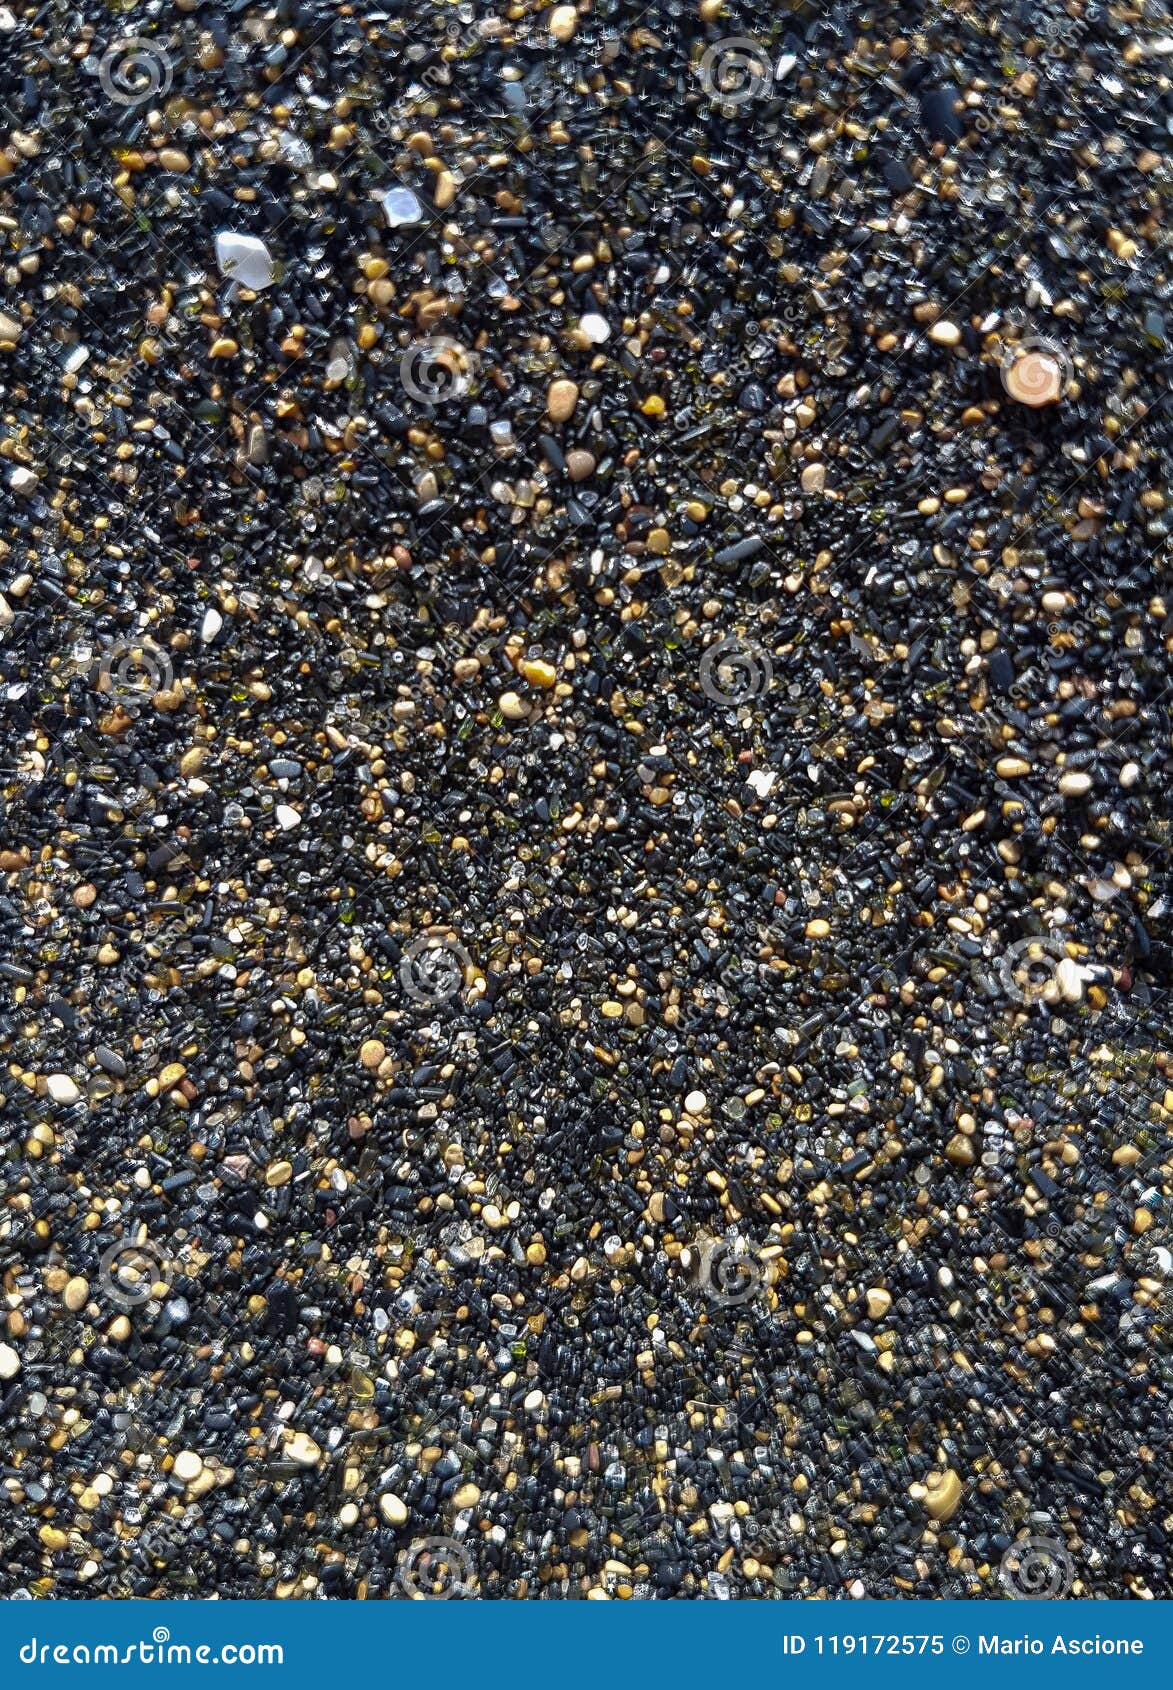 black sand close up view